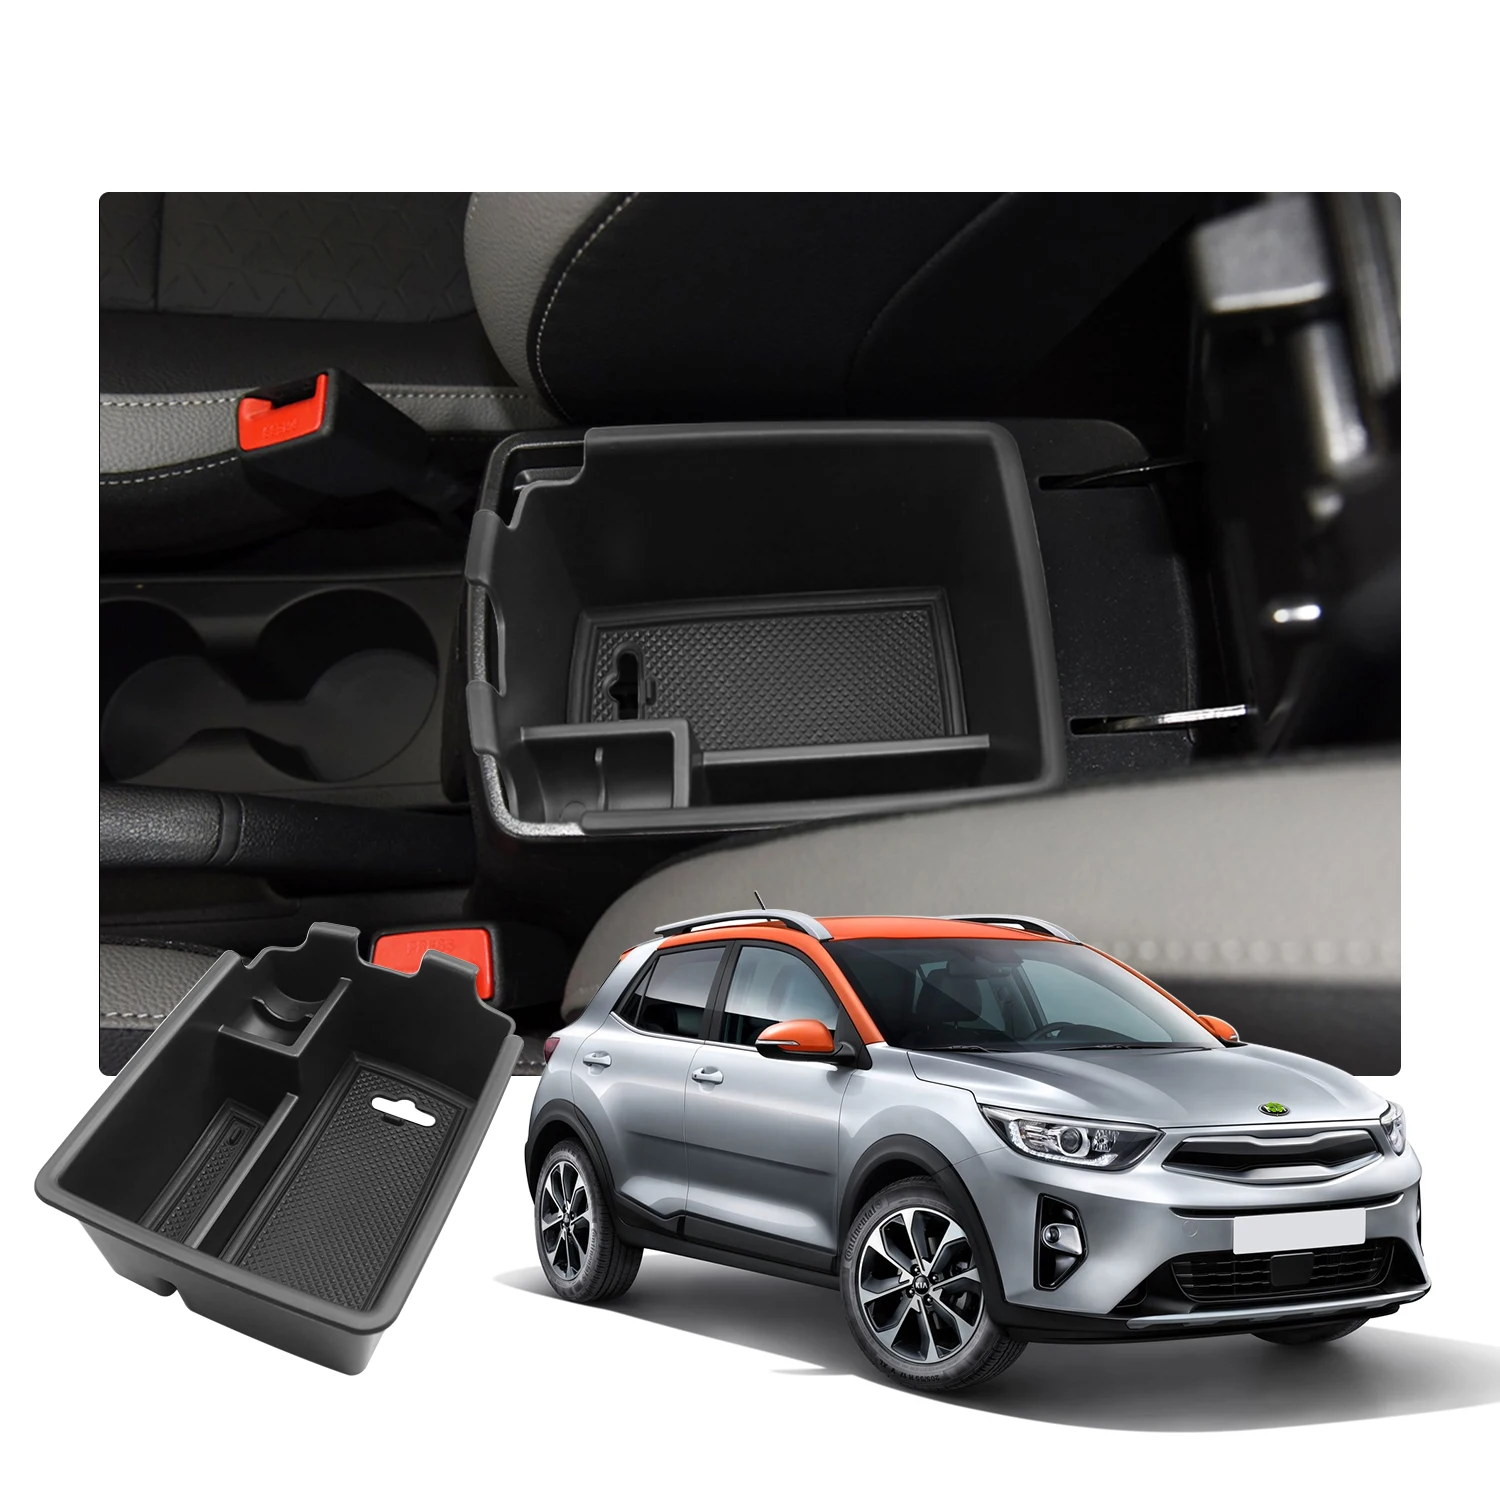 

RUIYA For Stonic 2018 2019 2020 Car Armrest Box Storage Central Control Container Auto Interior Organizer Accessories Black